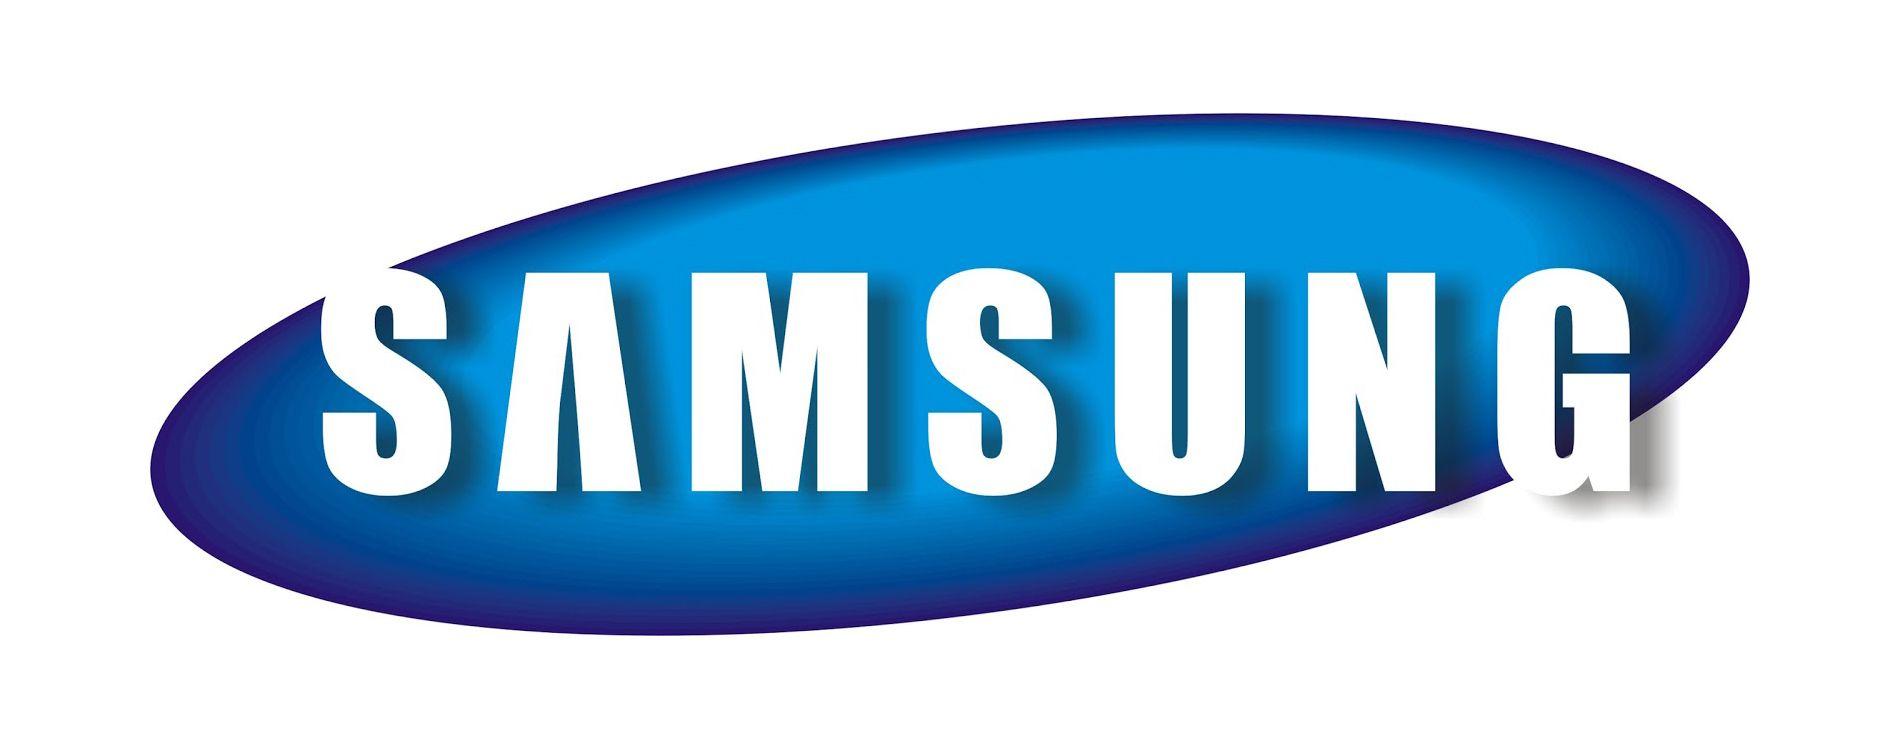 Samsung History Logo - Samsung Logos